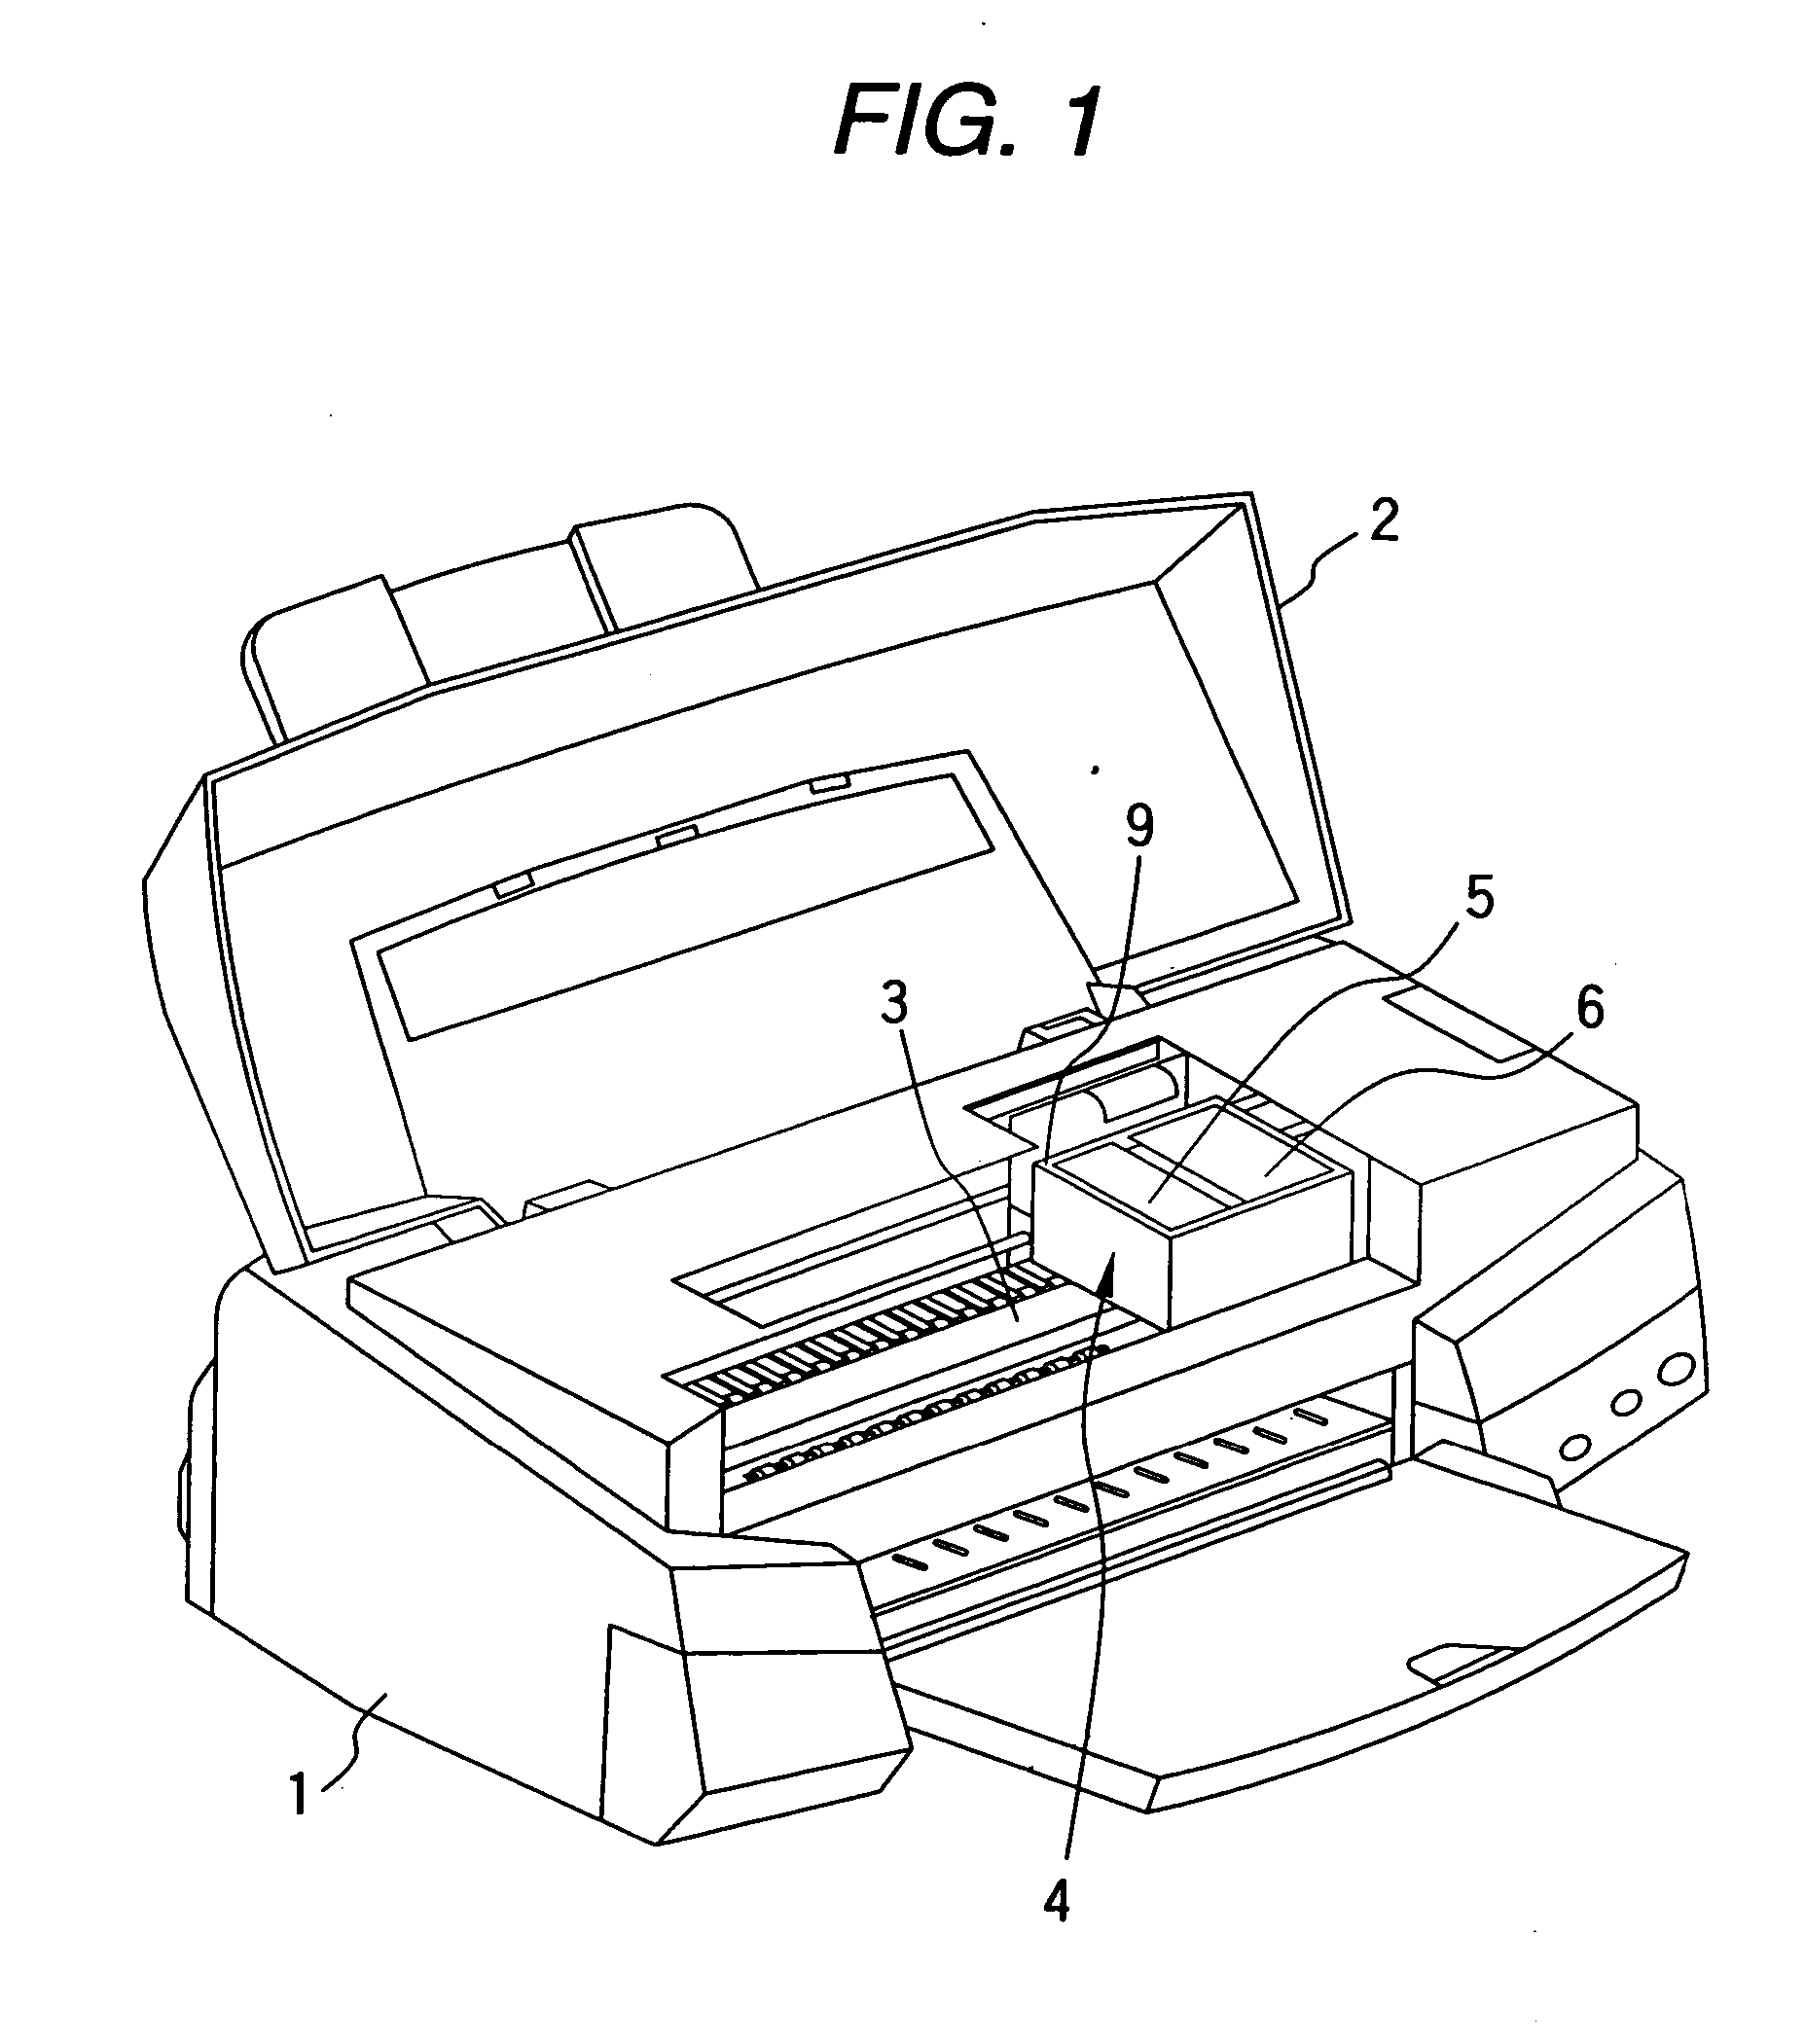 Inkjet recording apparatus and ink cartridge